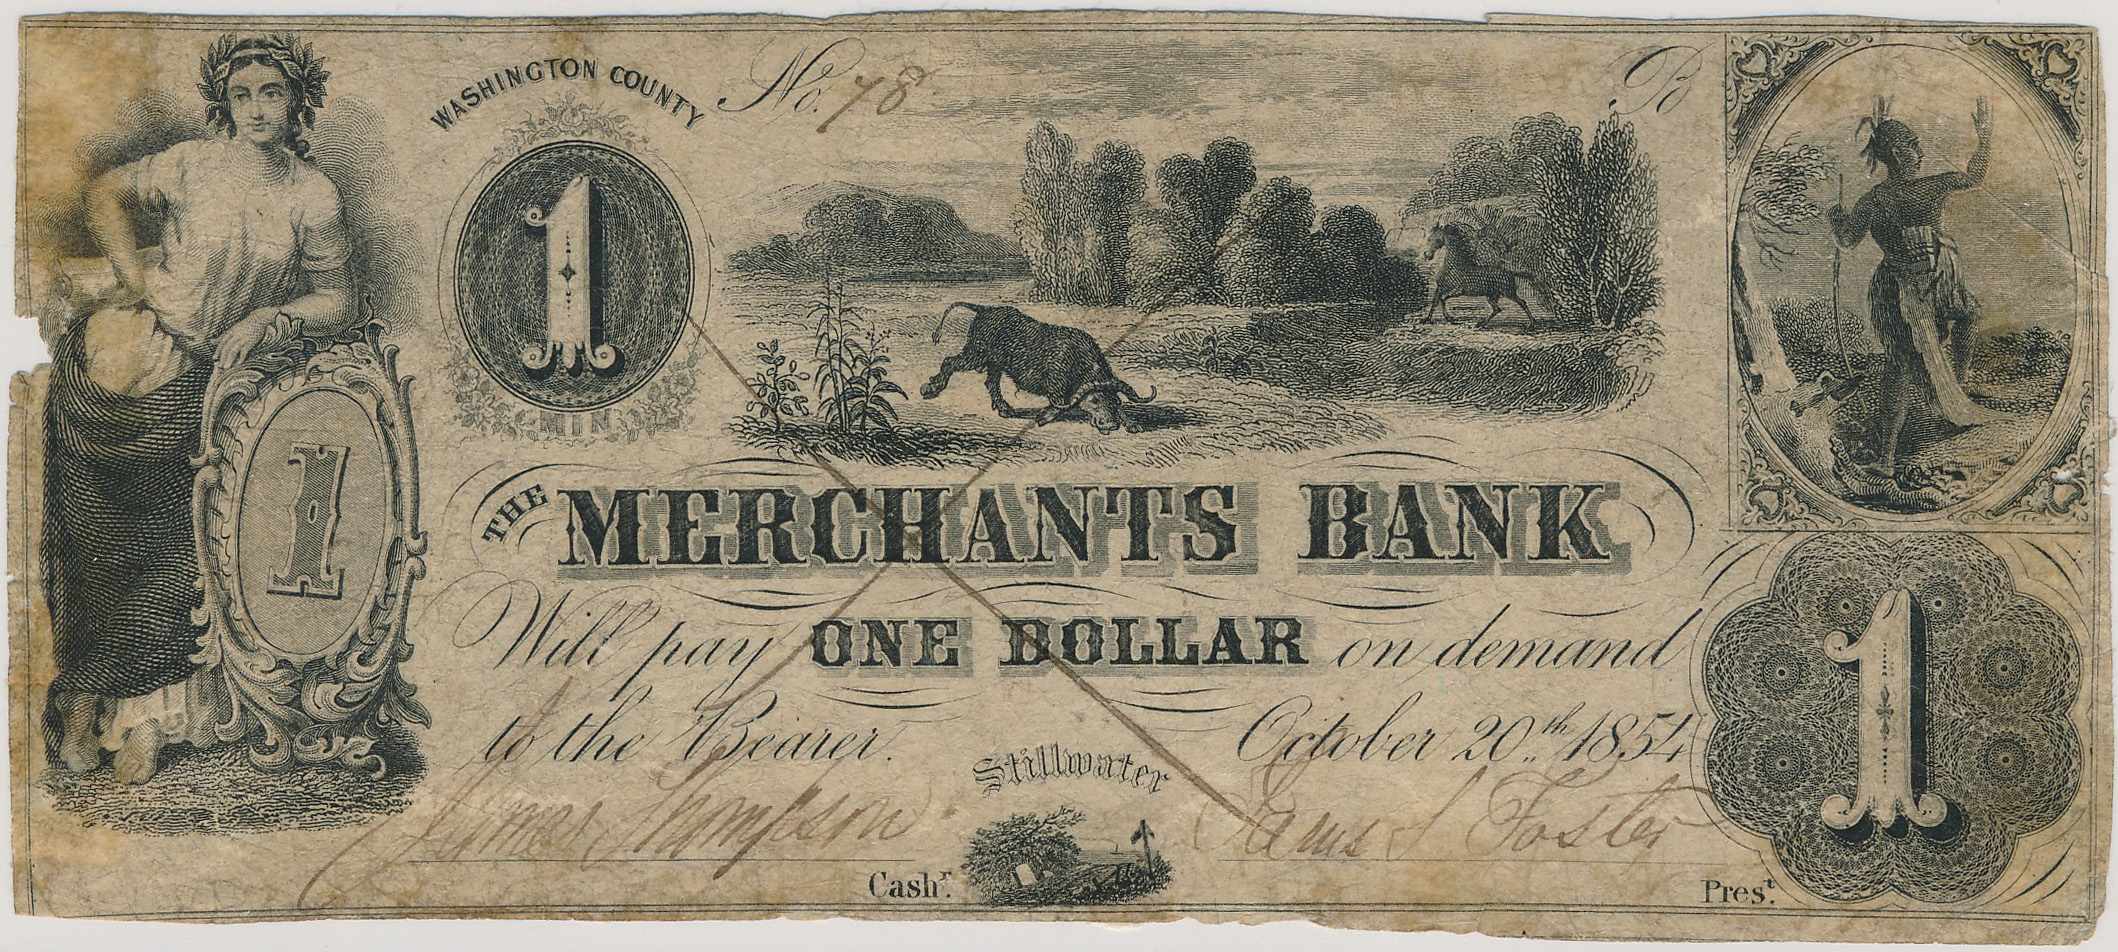 $1 Merchants Bank